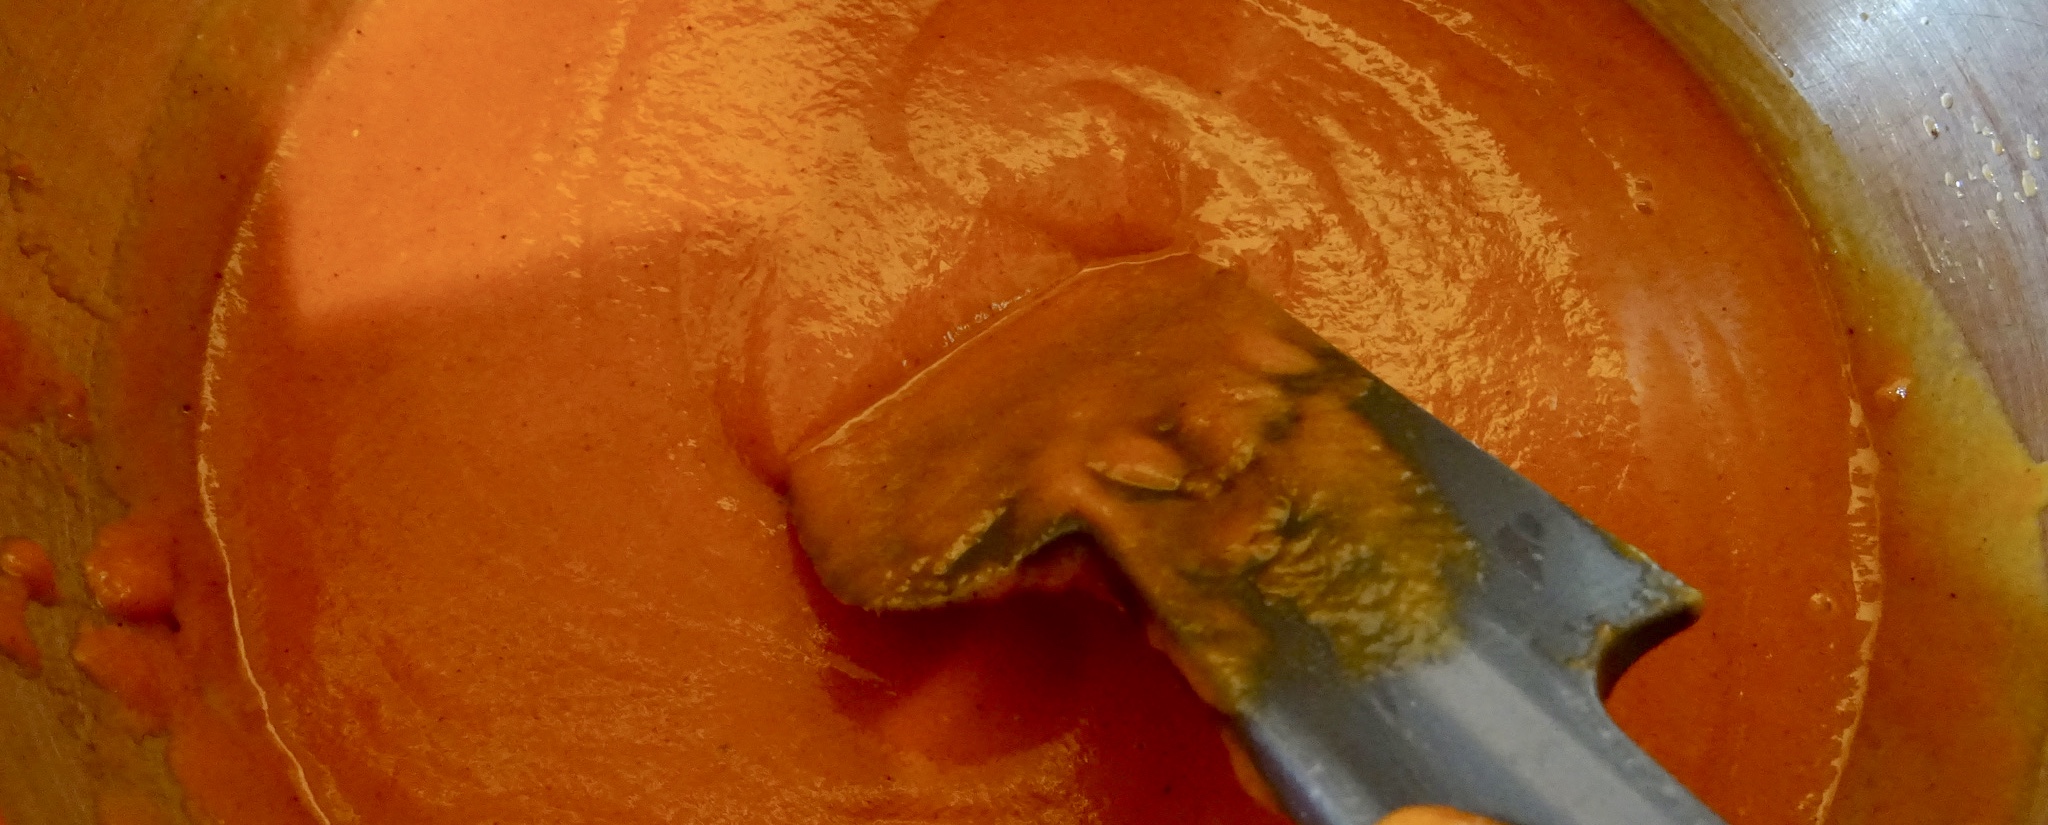 Homemade Tomato Ketchup.